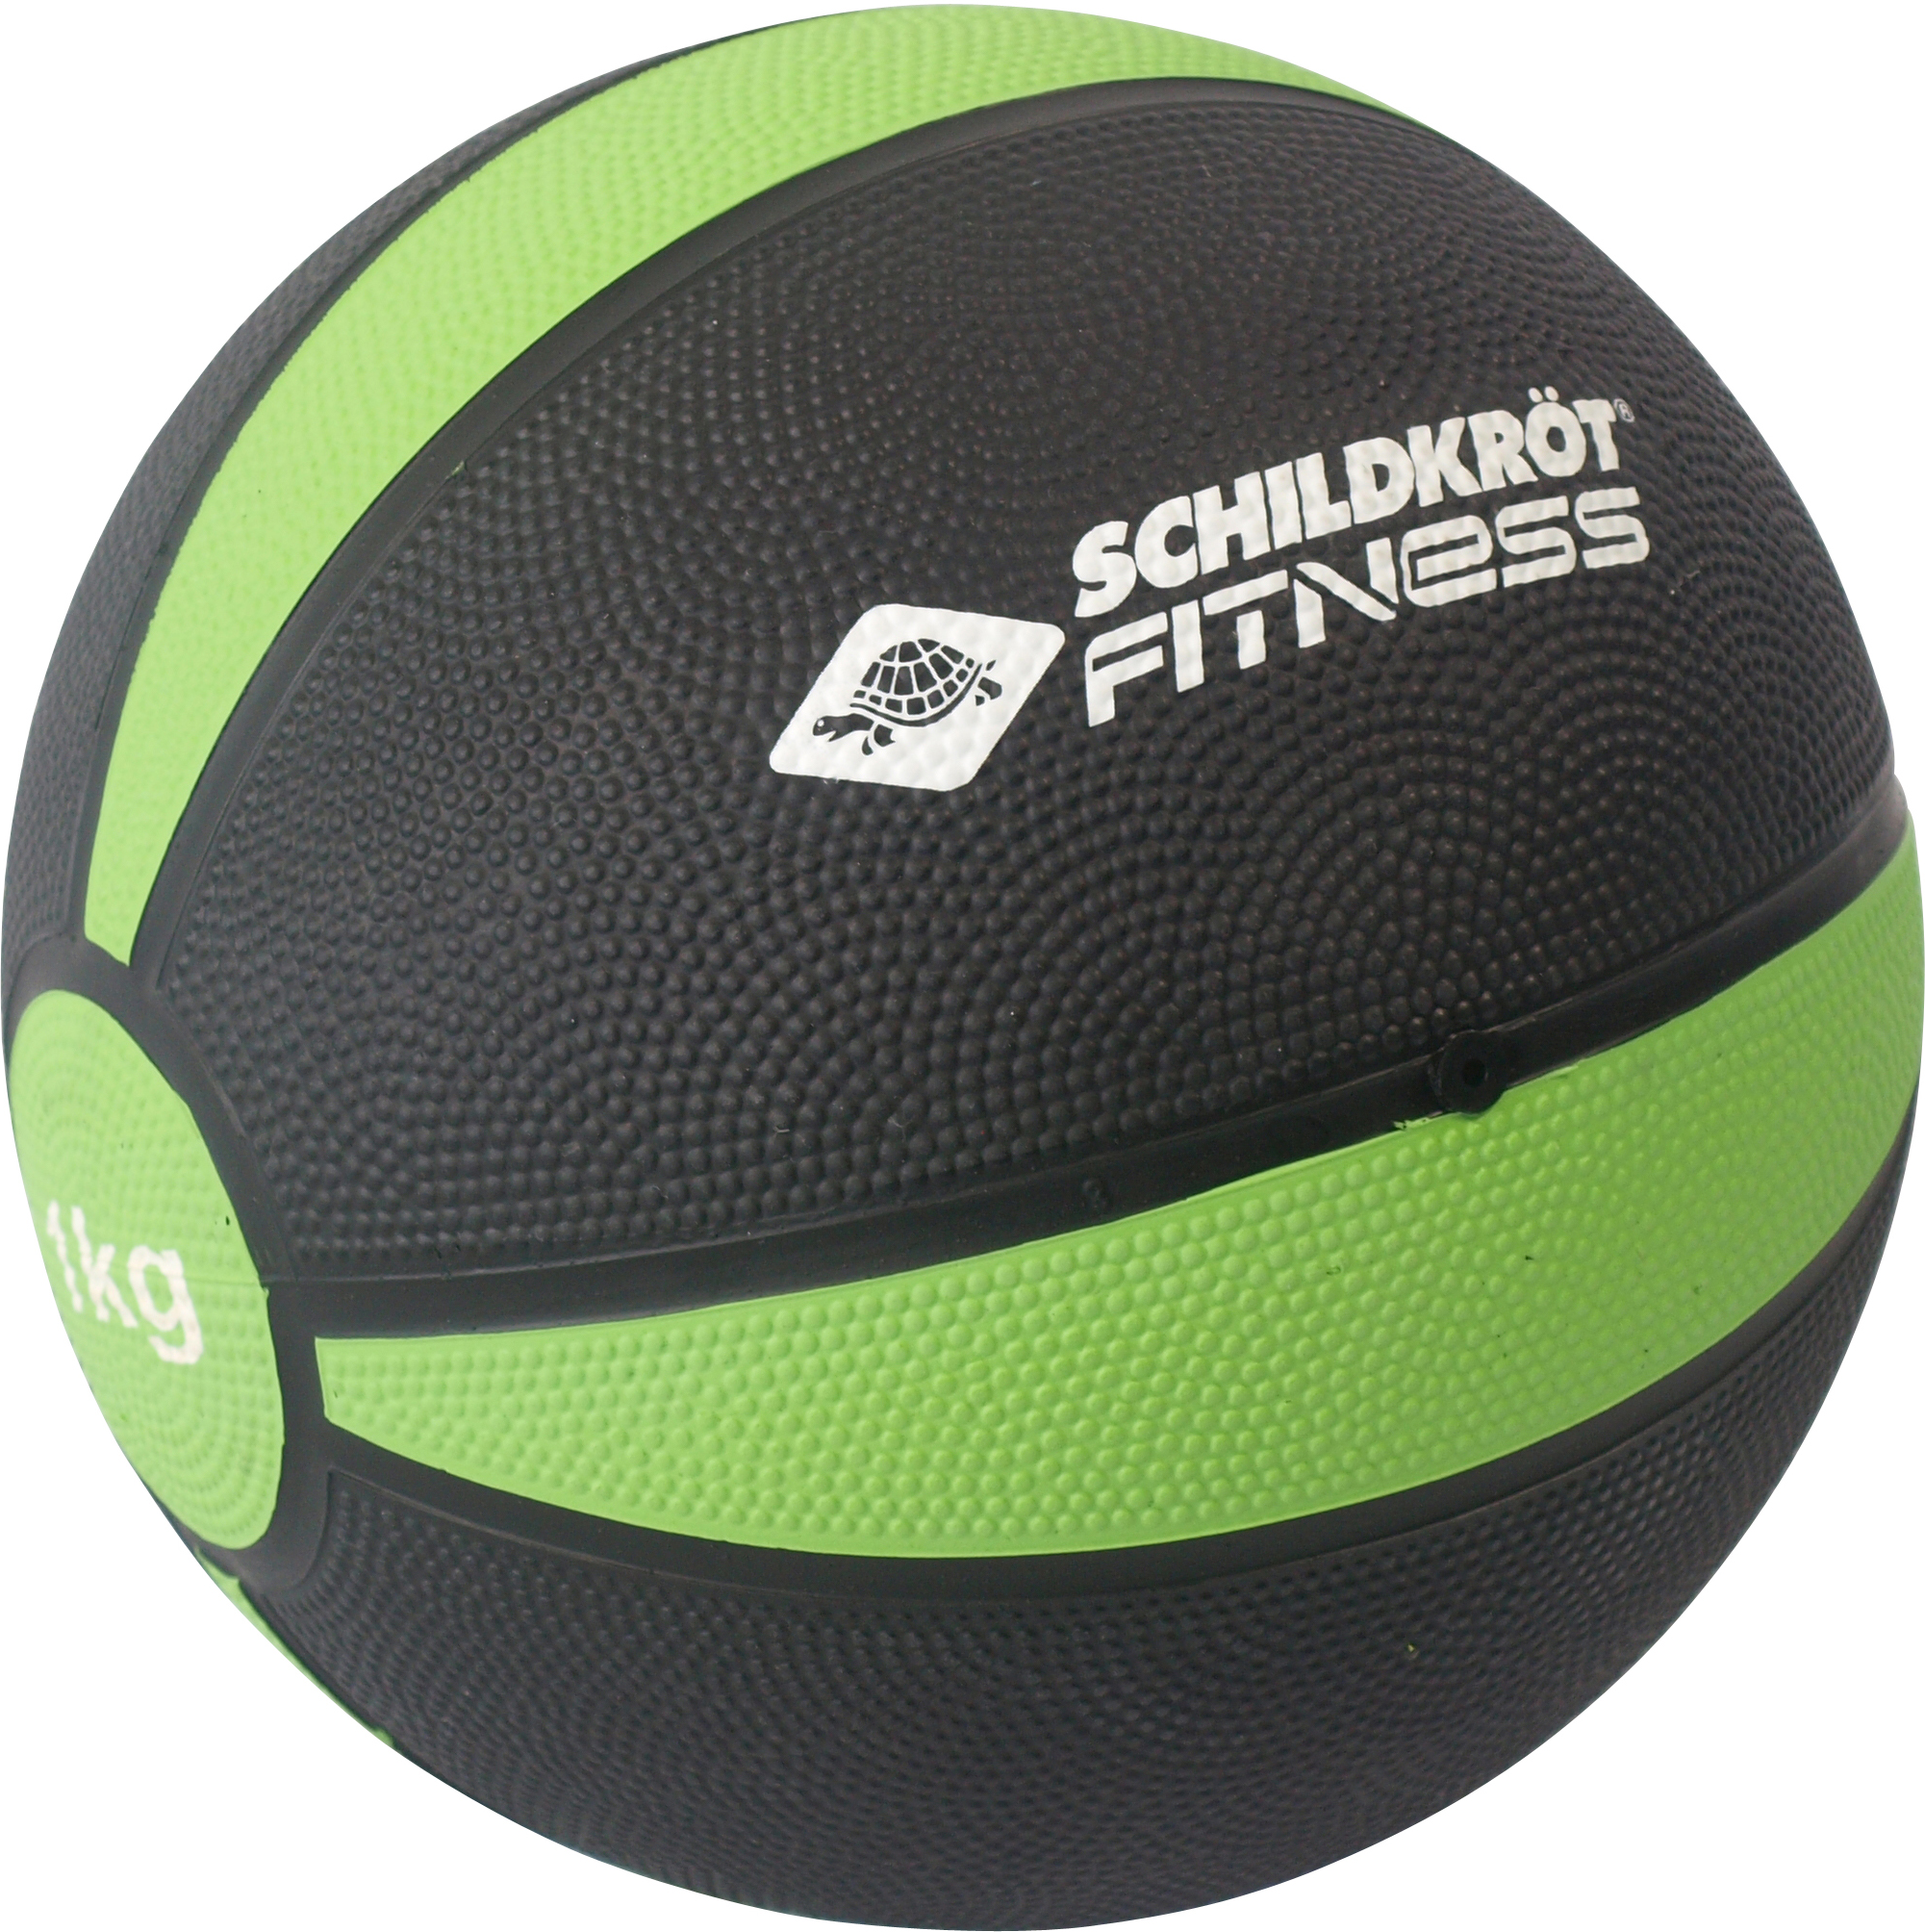 SK Fitness MEDICINE | in - box Wolf sight 000 Intersport (black-green) 1kg, BALL